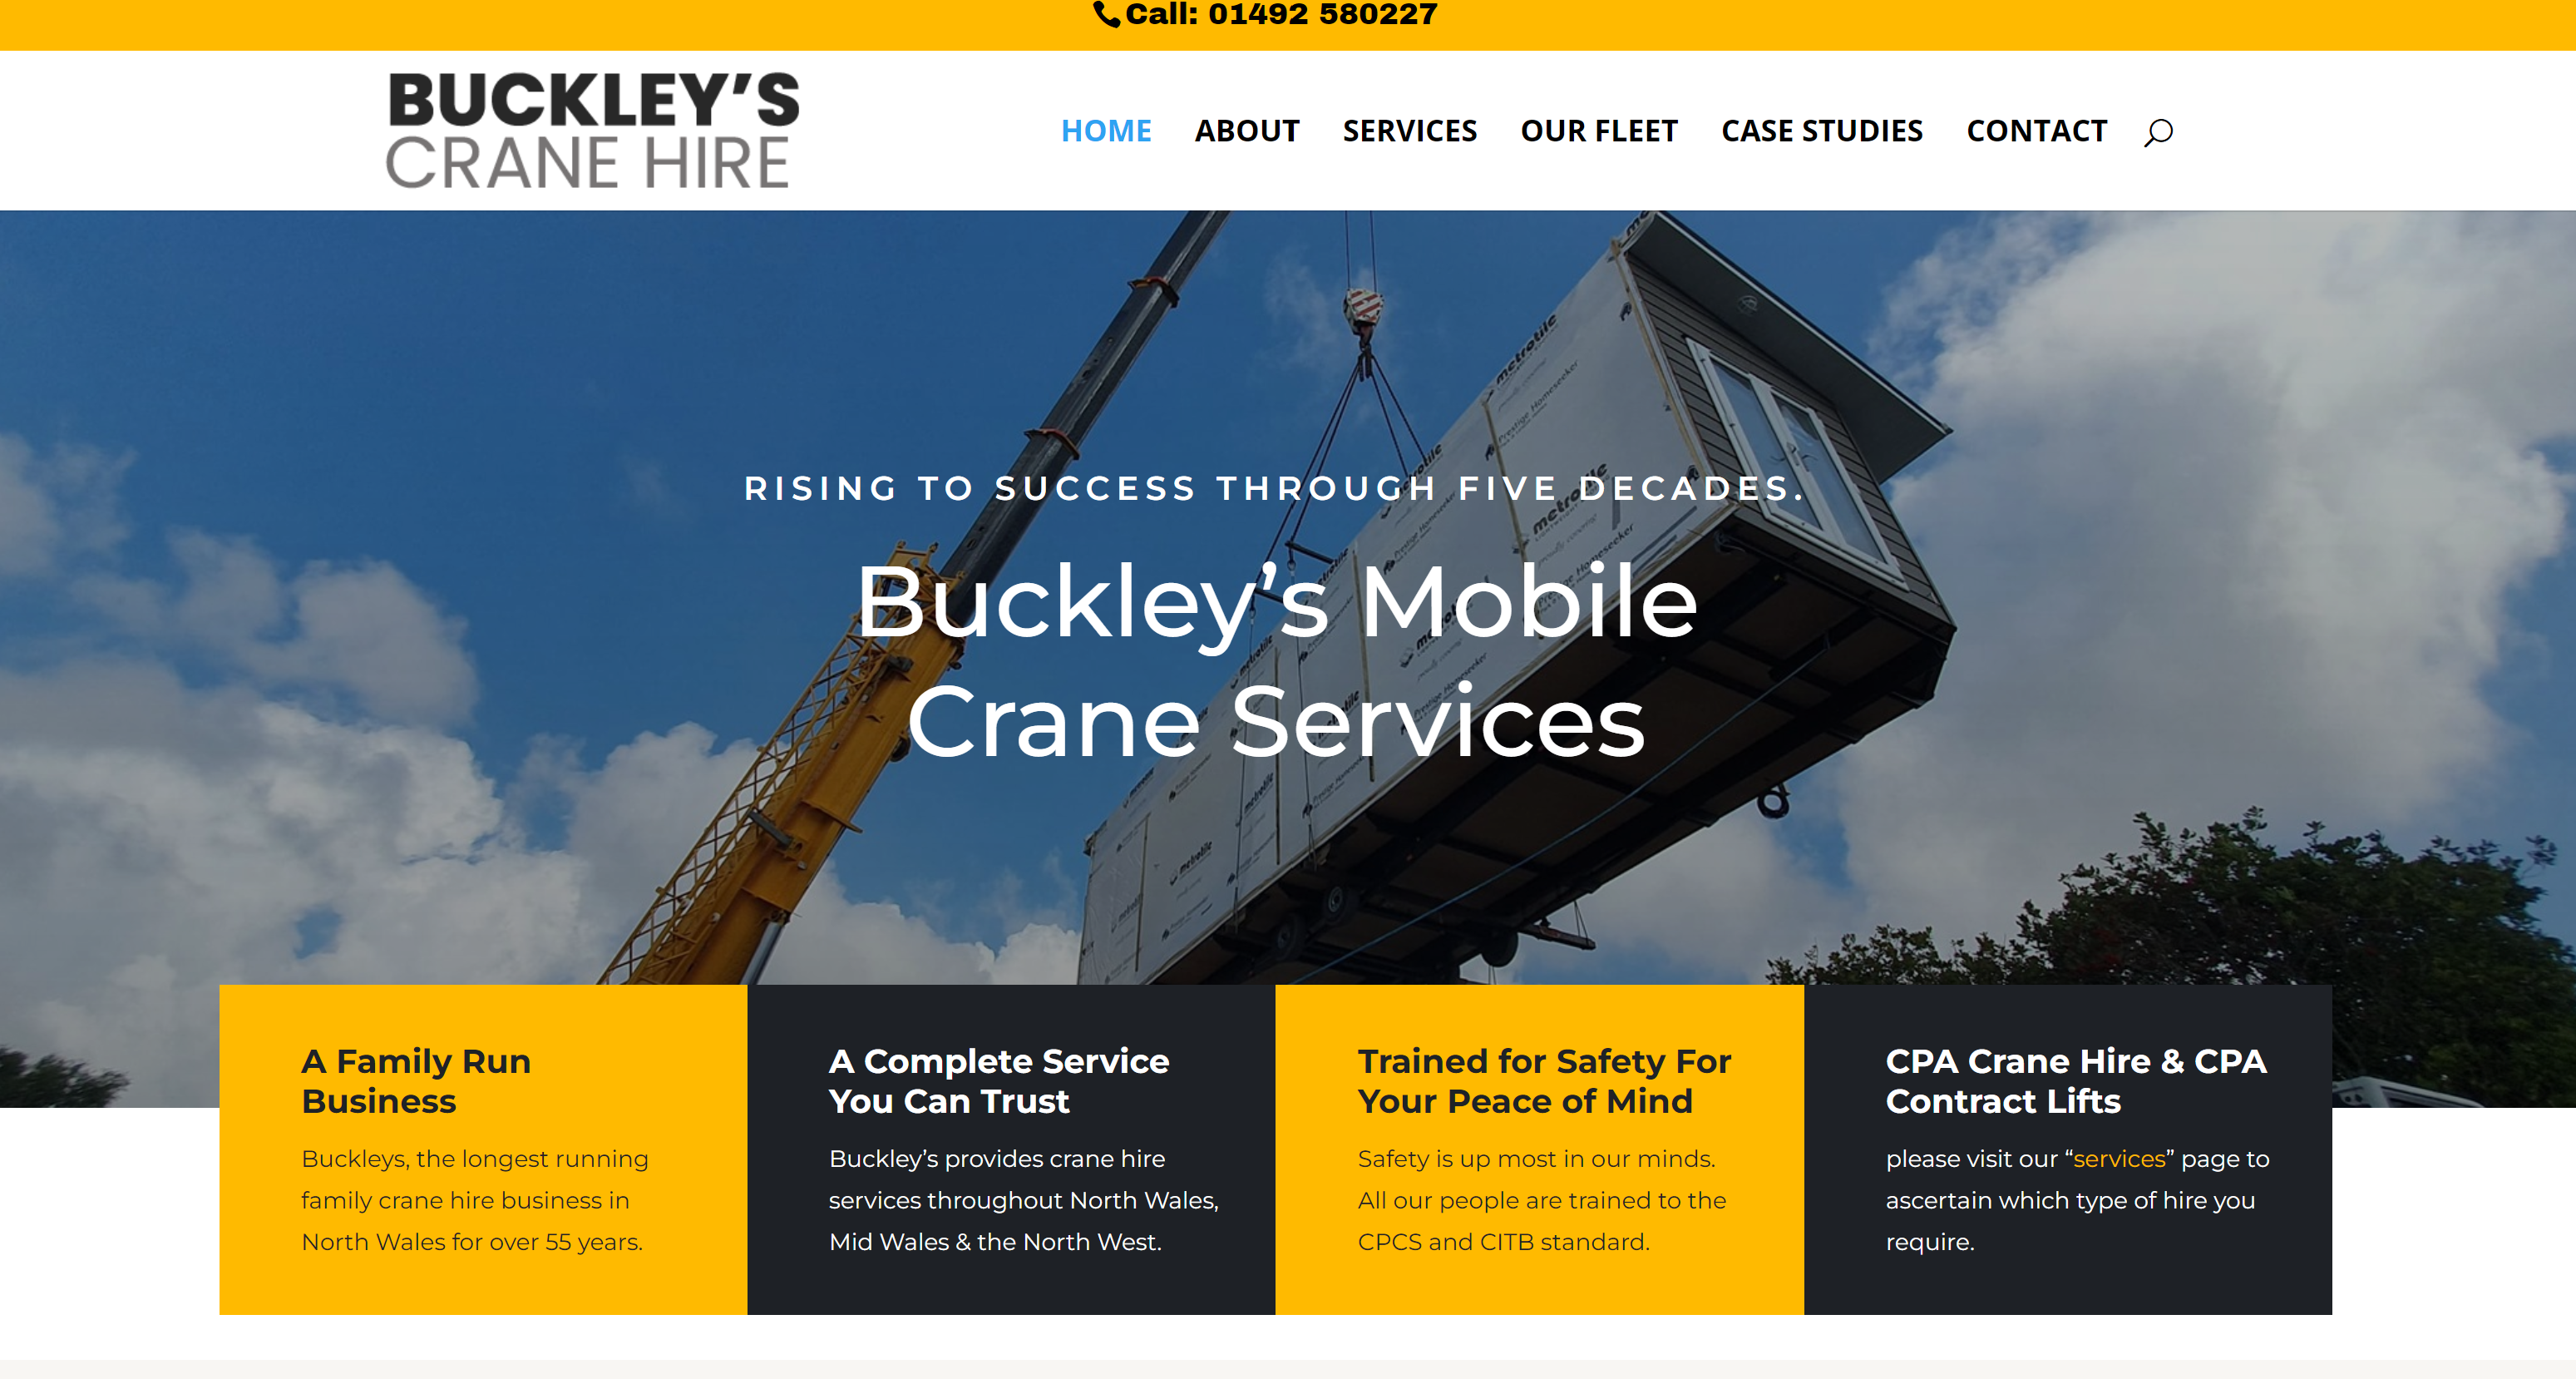 Buckley’s Mobile Crane Services